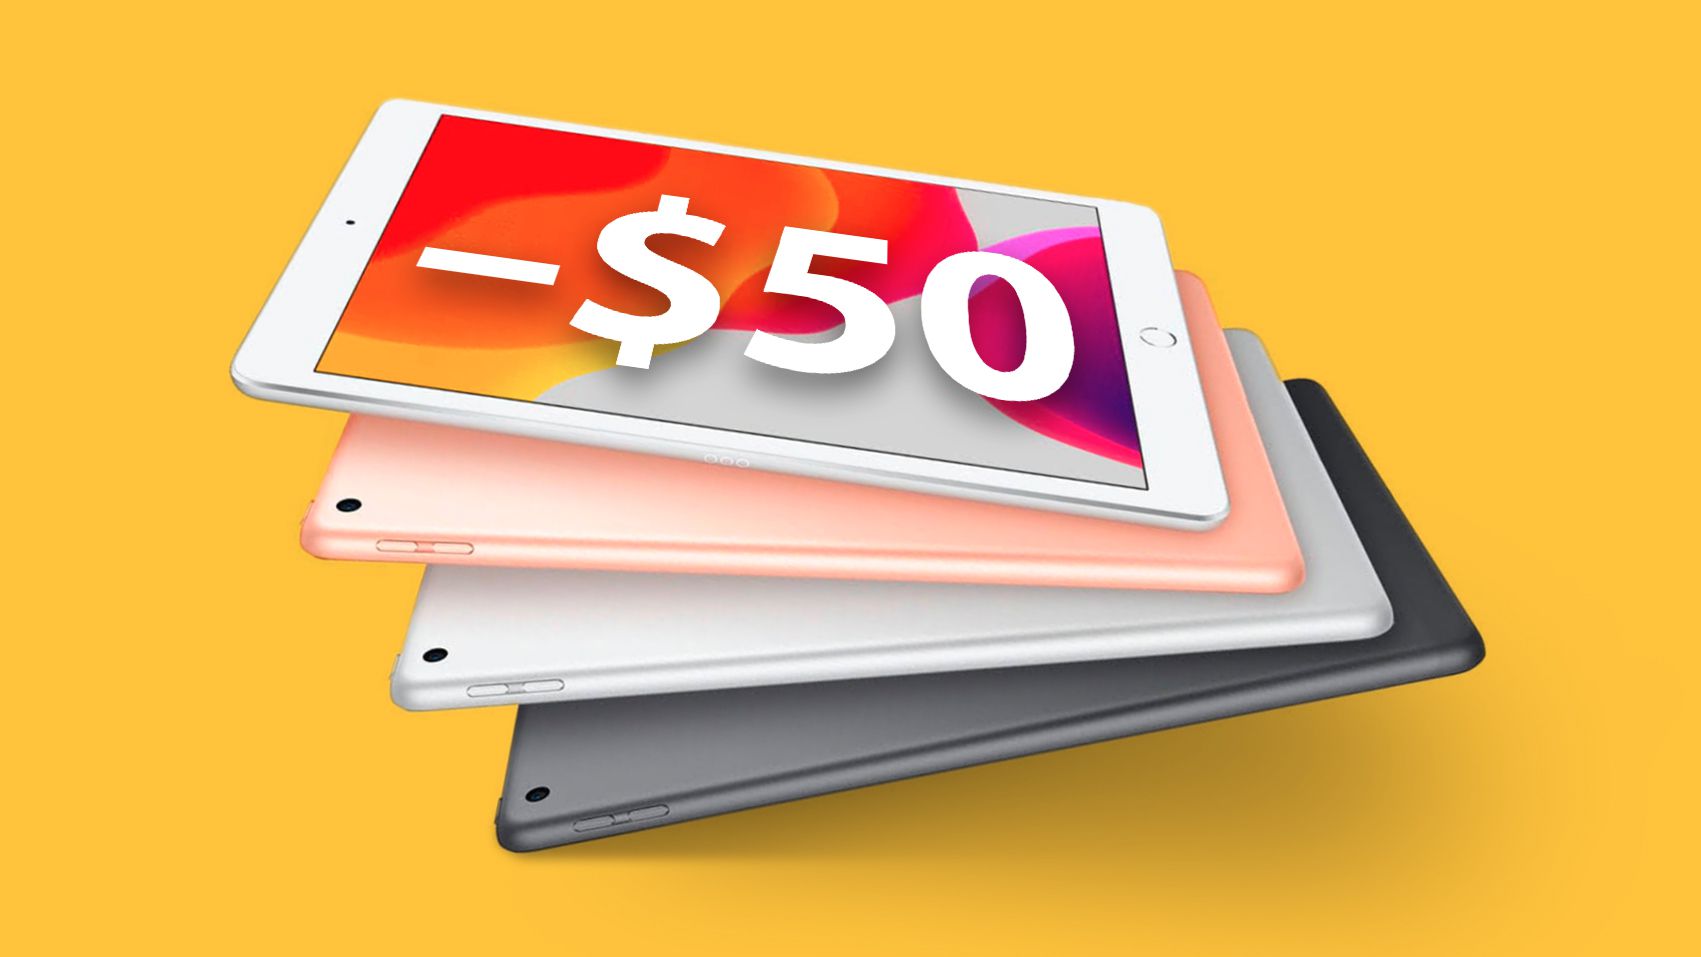 Deals Ipad Mini 5 Sales Start At 349 99 For 64gb Wi Fi More Models At 50 Off Macrumors